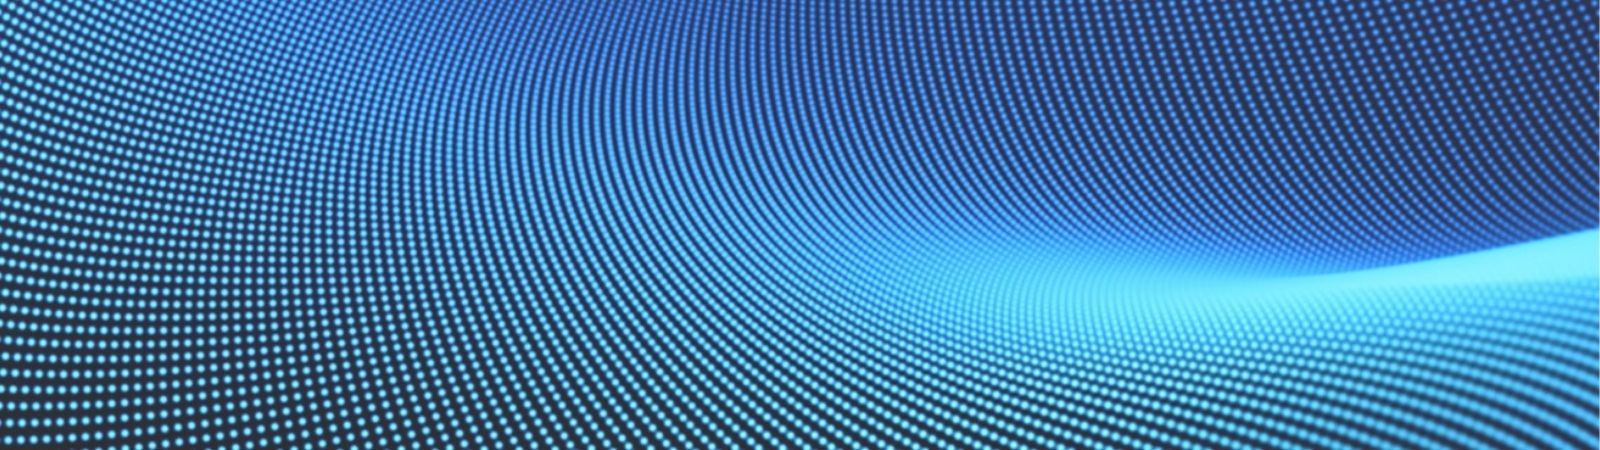 Blue digital mesh wave